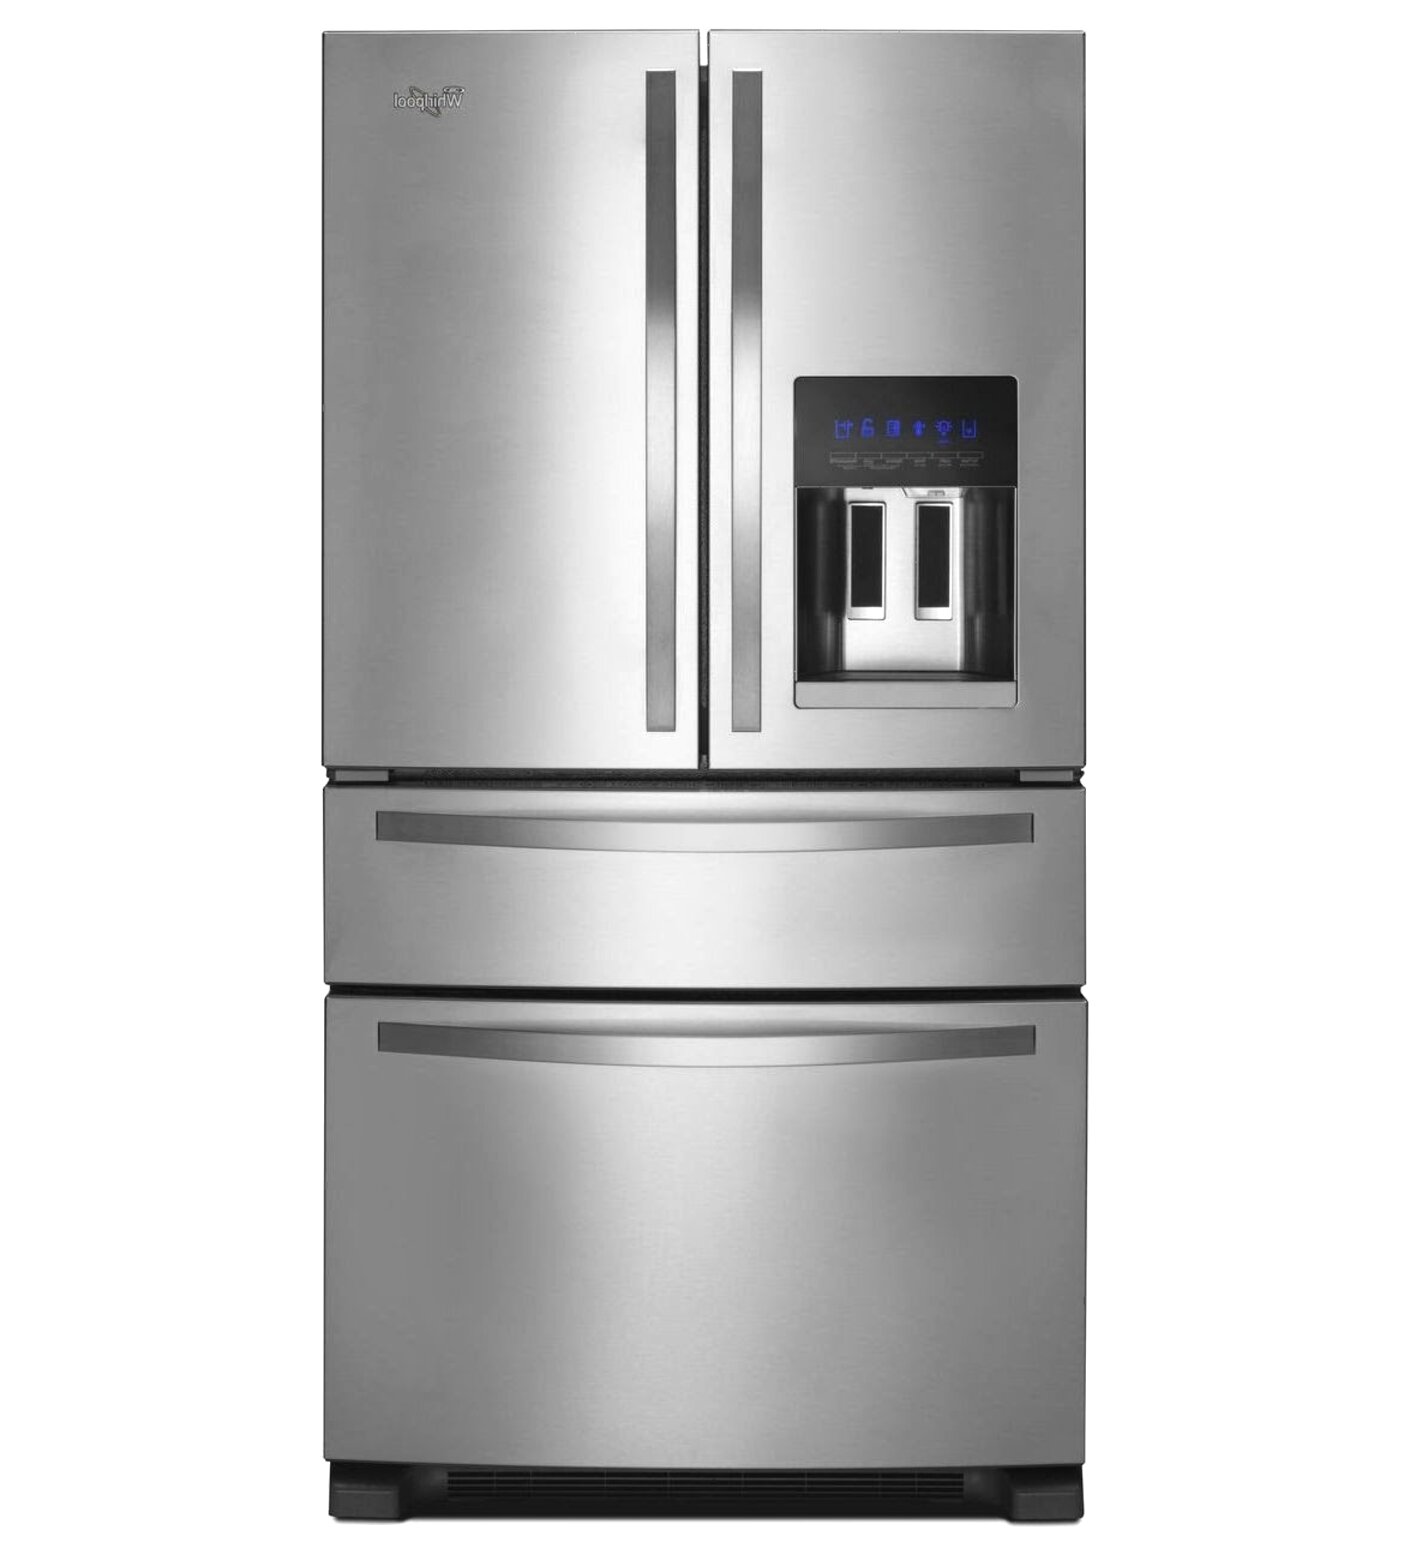 Whirlpool Refrigerator for sale in UK | 53 used Whirlpool Refrigerators